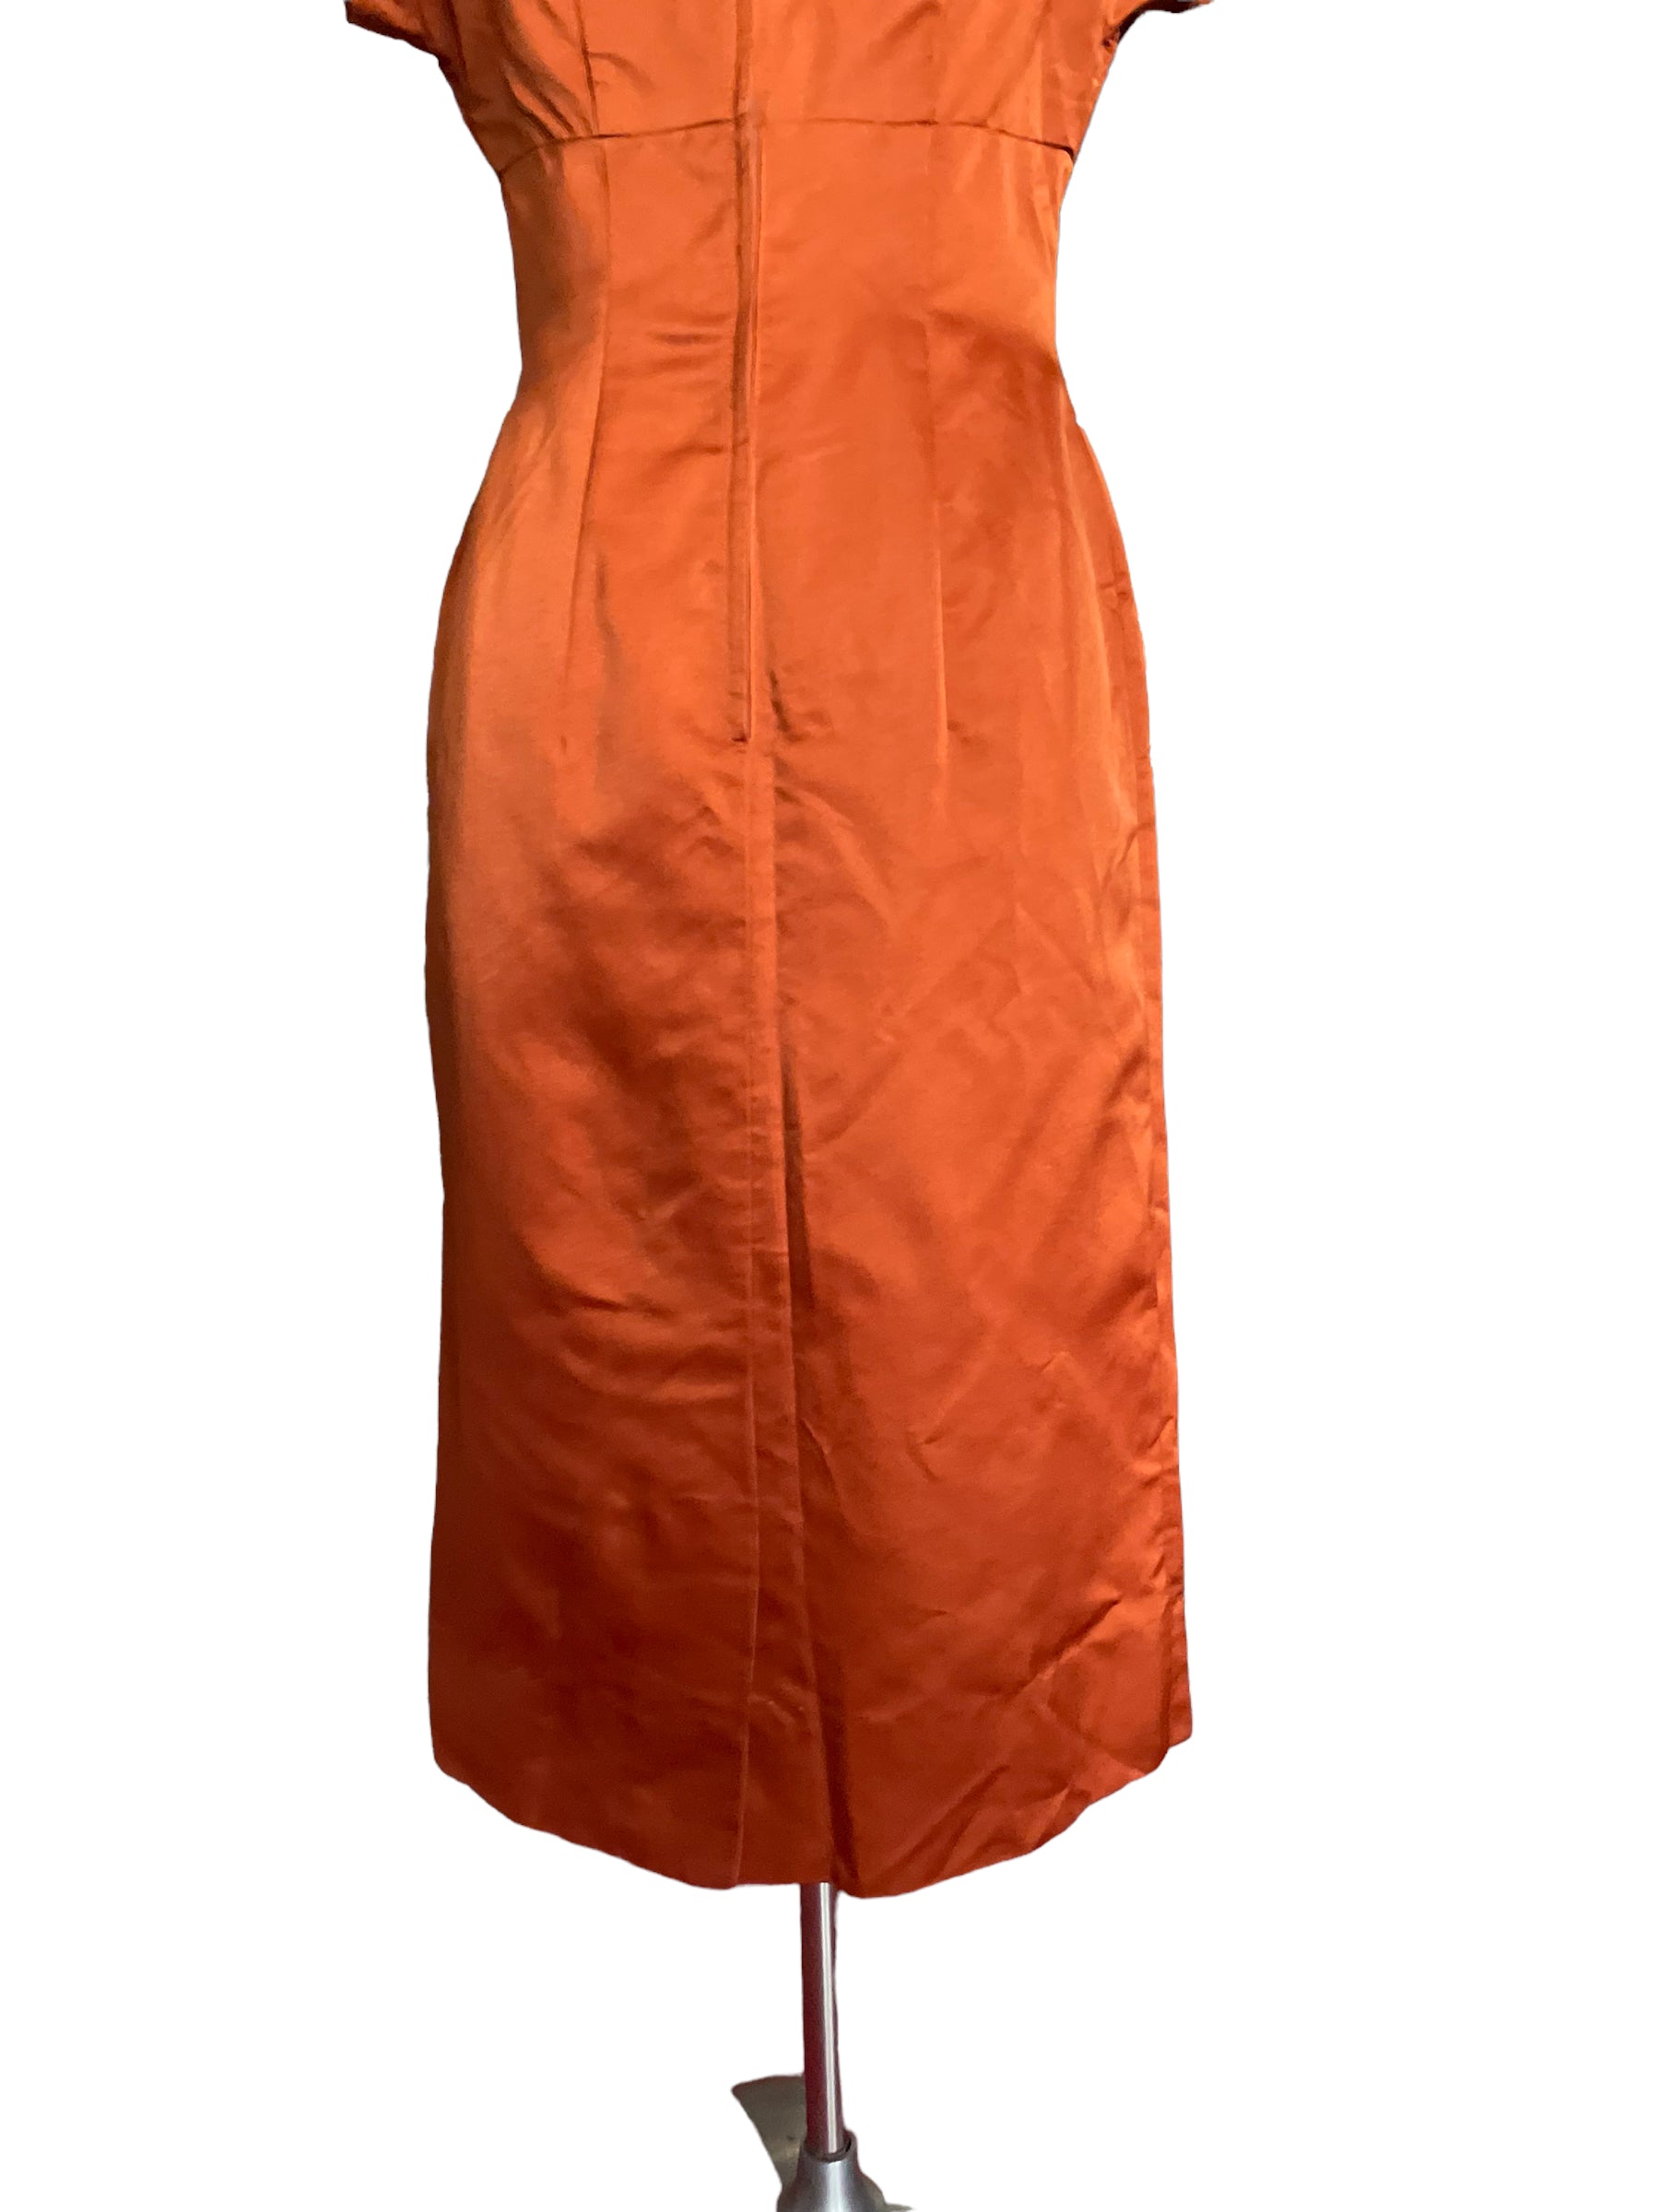 Back skirt view of Vintage 1950s Burnt Orange Silk Dress SZ M